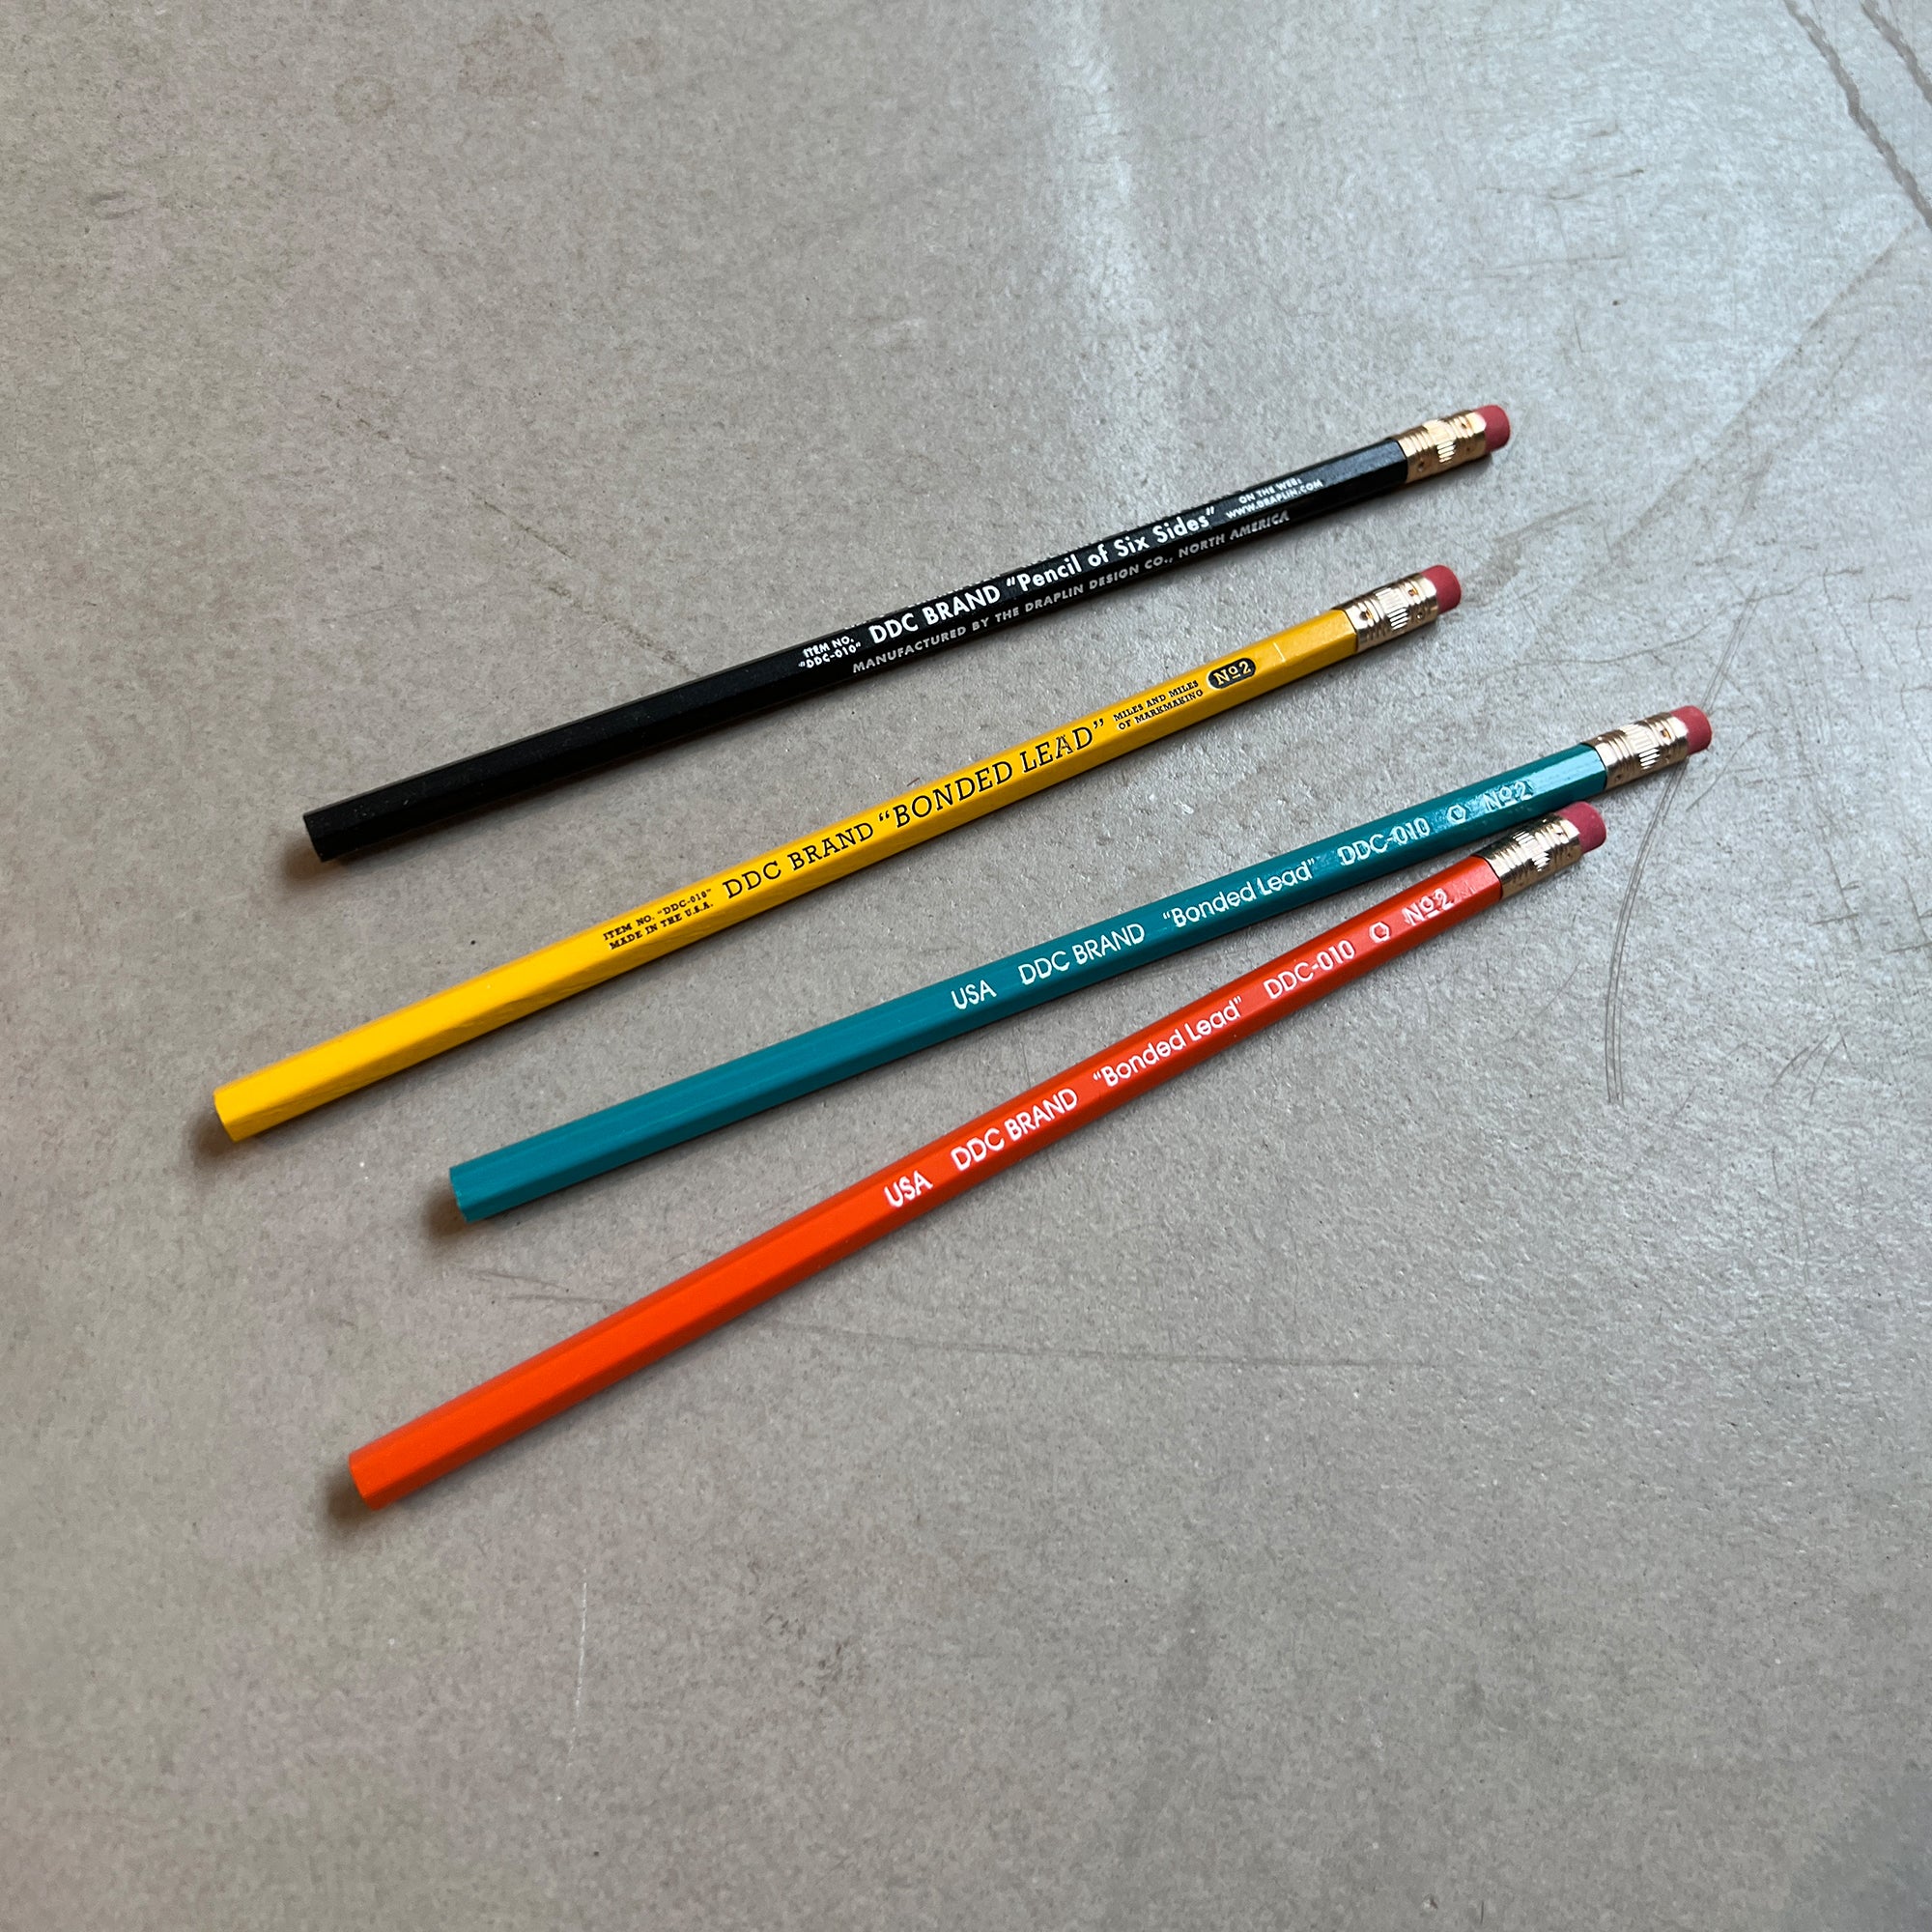 DDC-010 "Pencil of Six Sides"